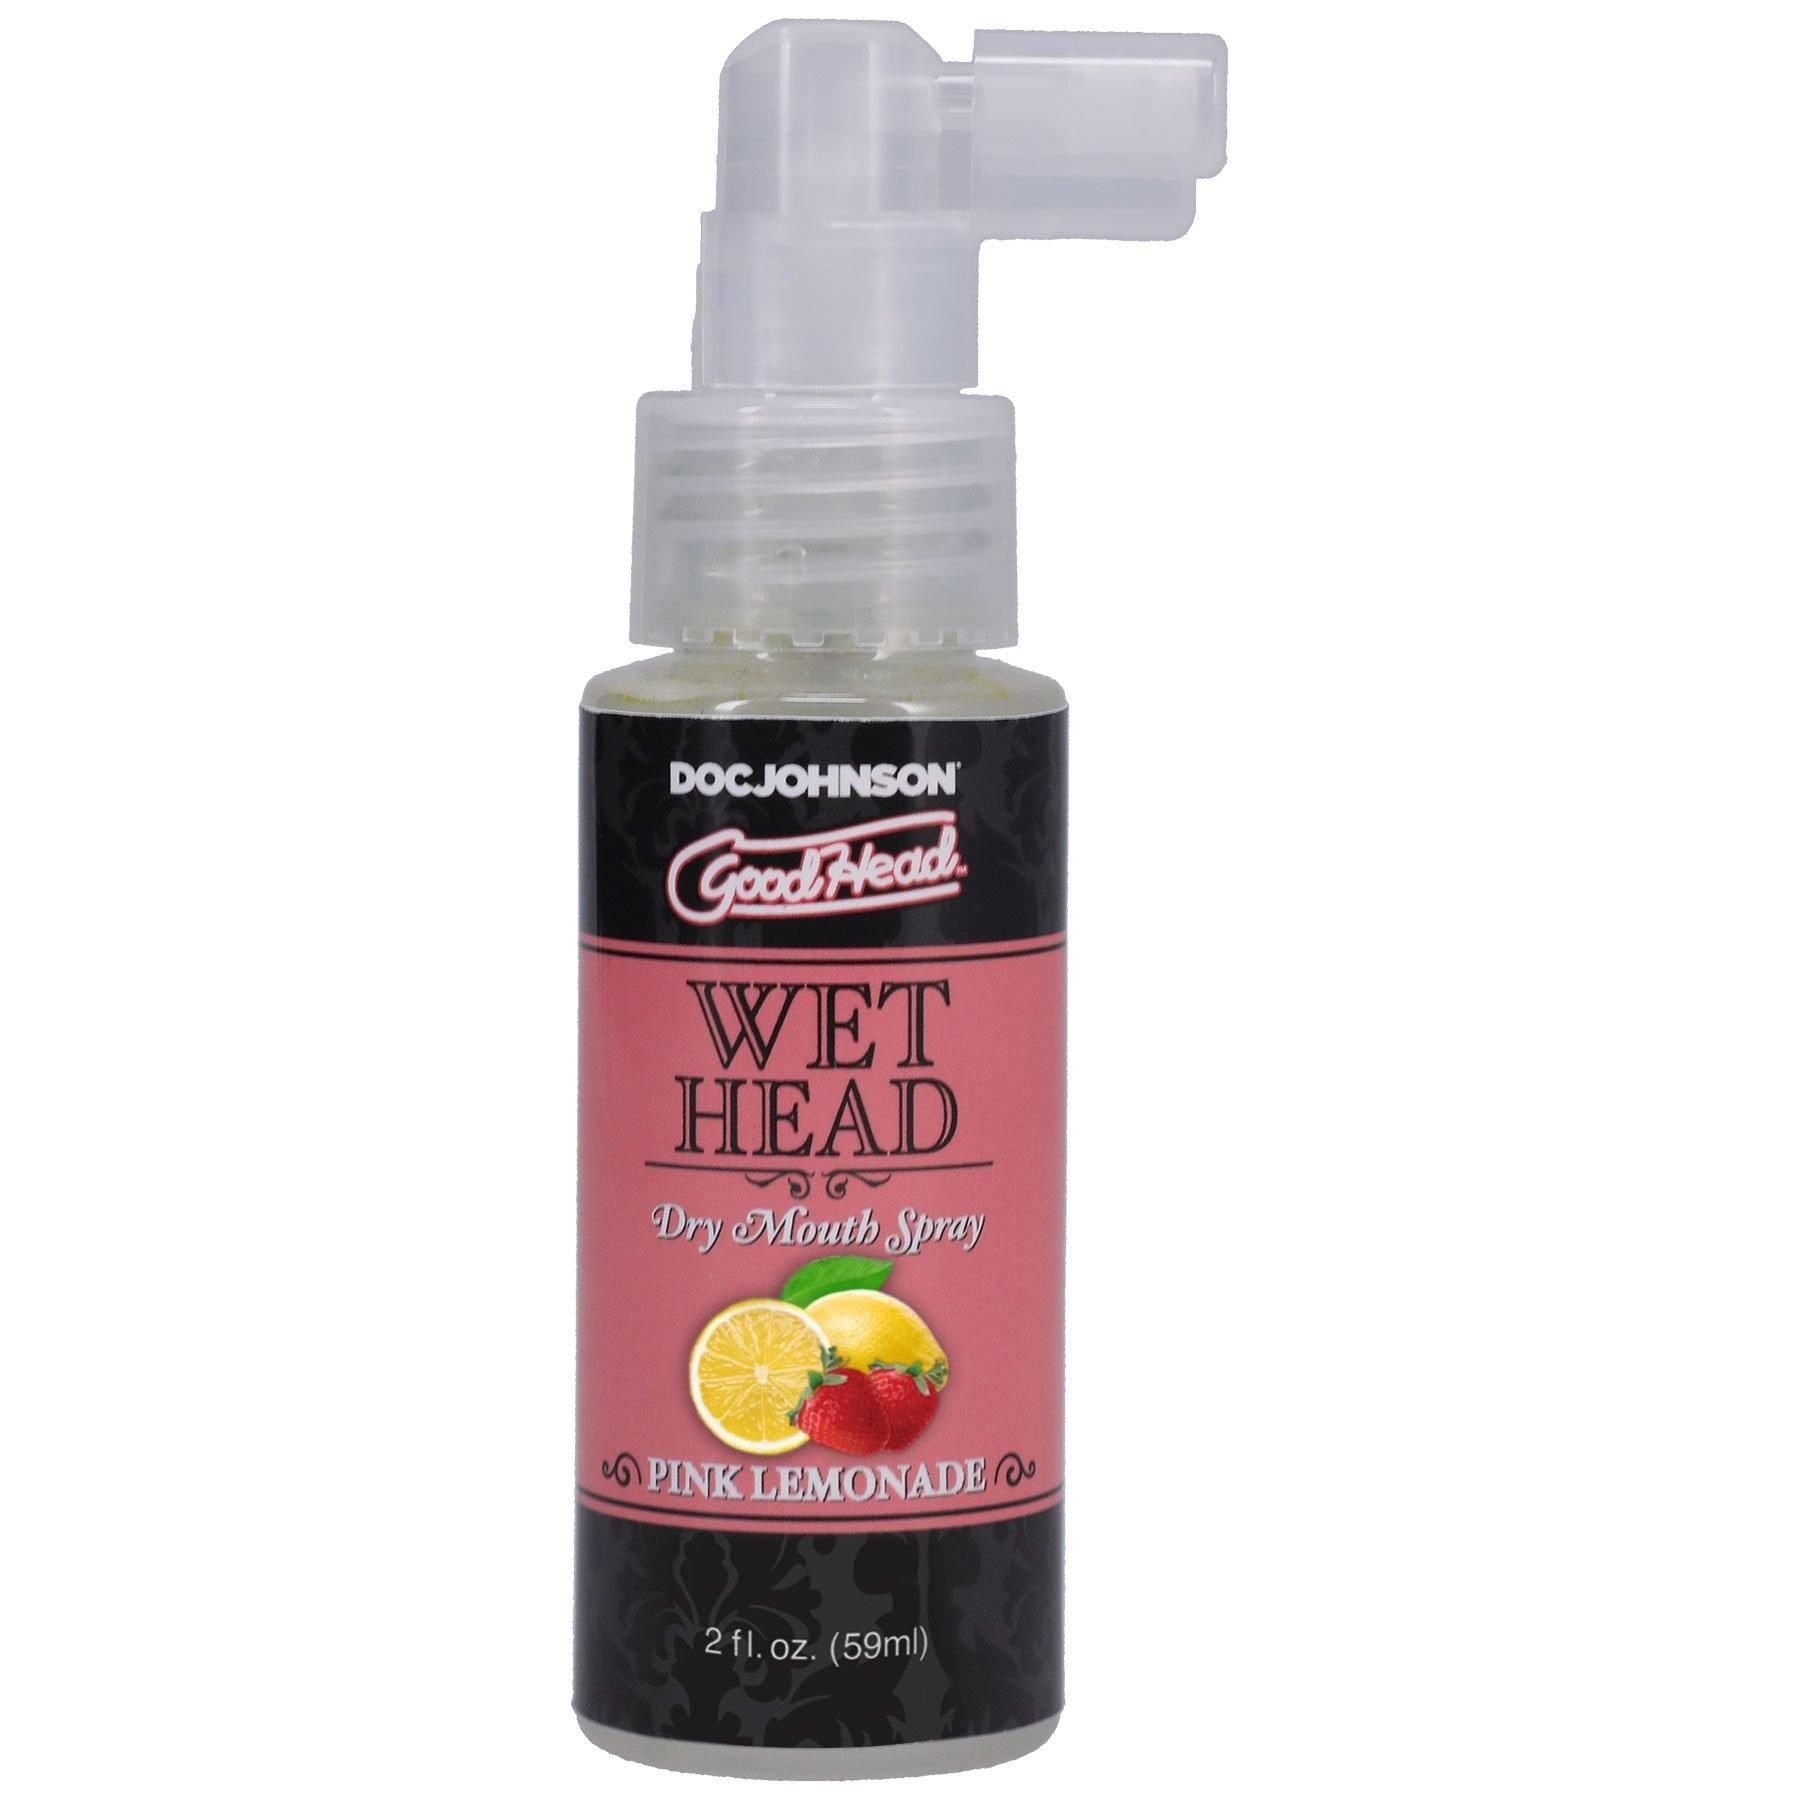 Goodhead - Wet Head - Dry Mouth Spray - Pink Lemonade - 2 Fl. Oz. (59ml) - My Sex Toy Hub